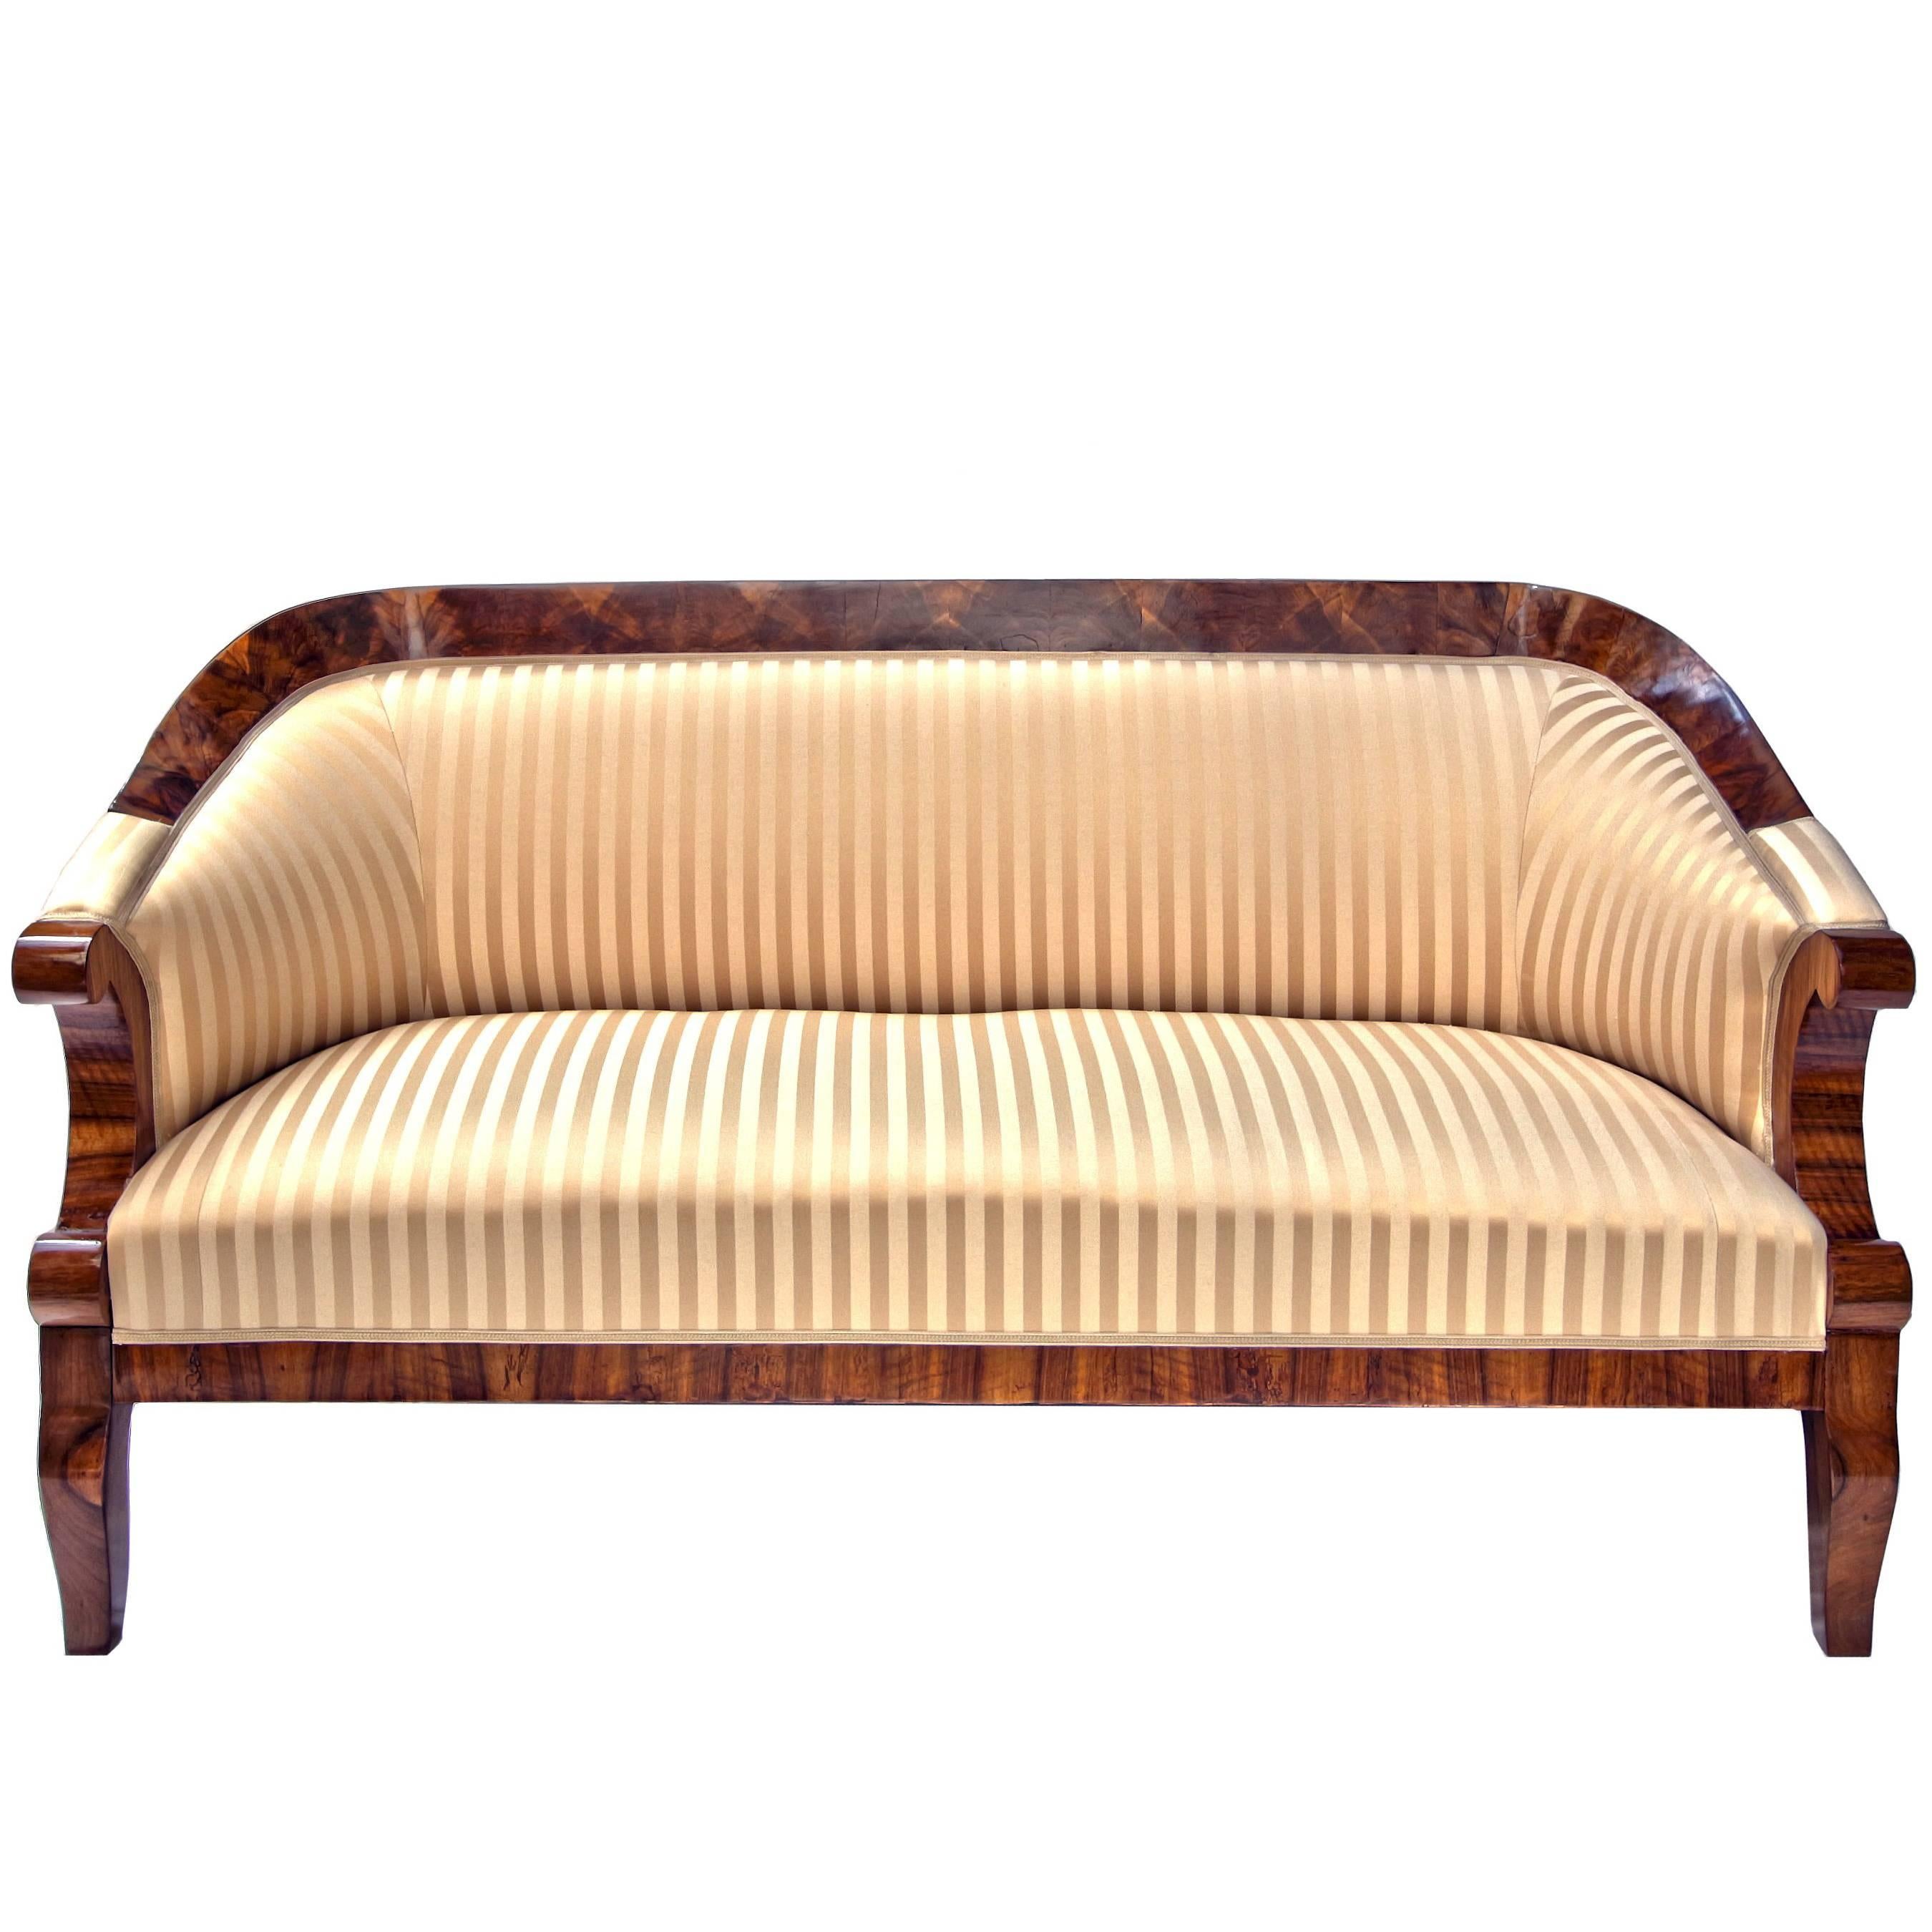 Early 19th Century Viennese Biedermeier Walnut Sofa from the 1820s